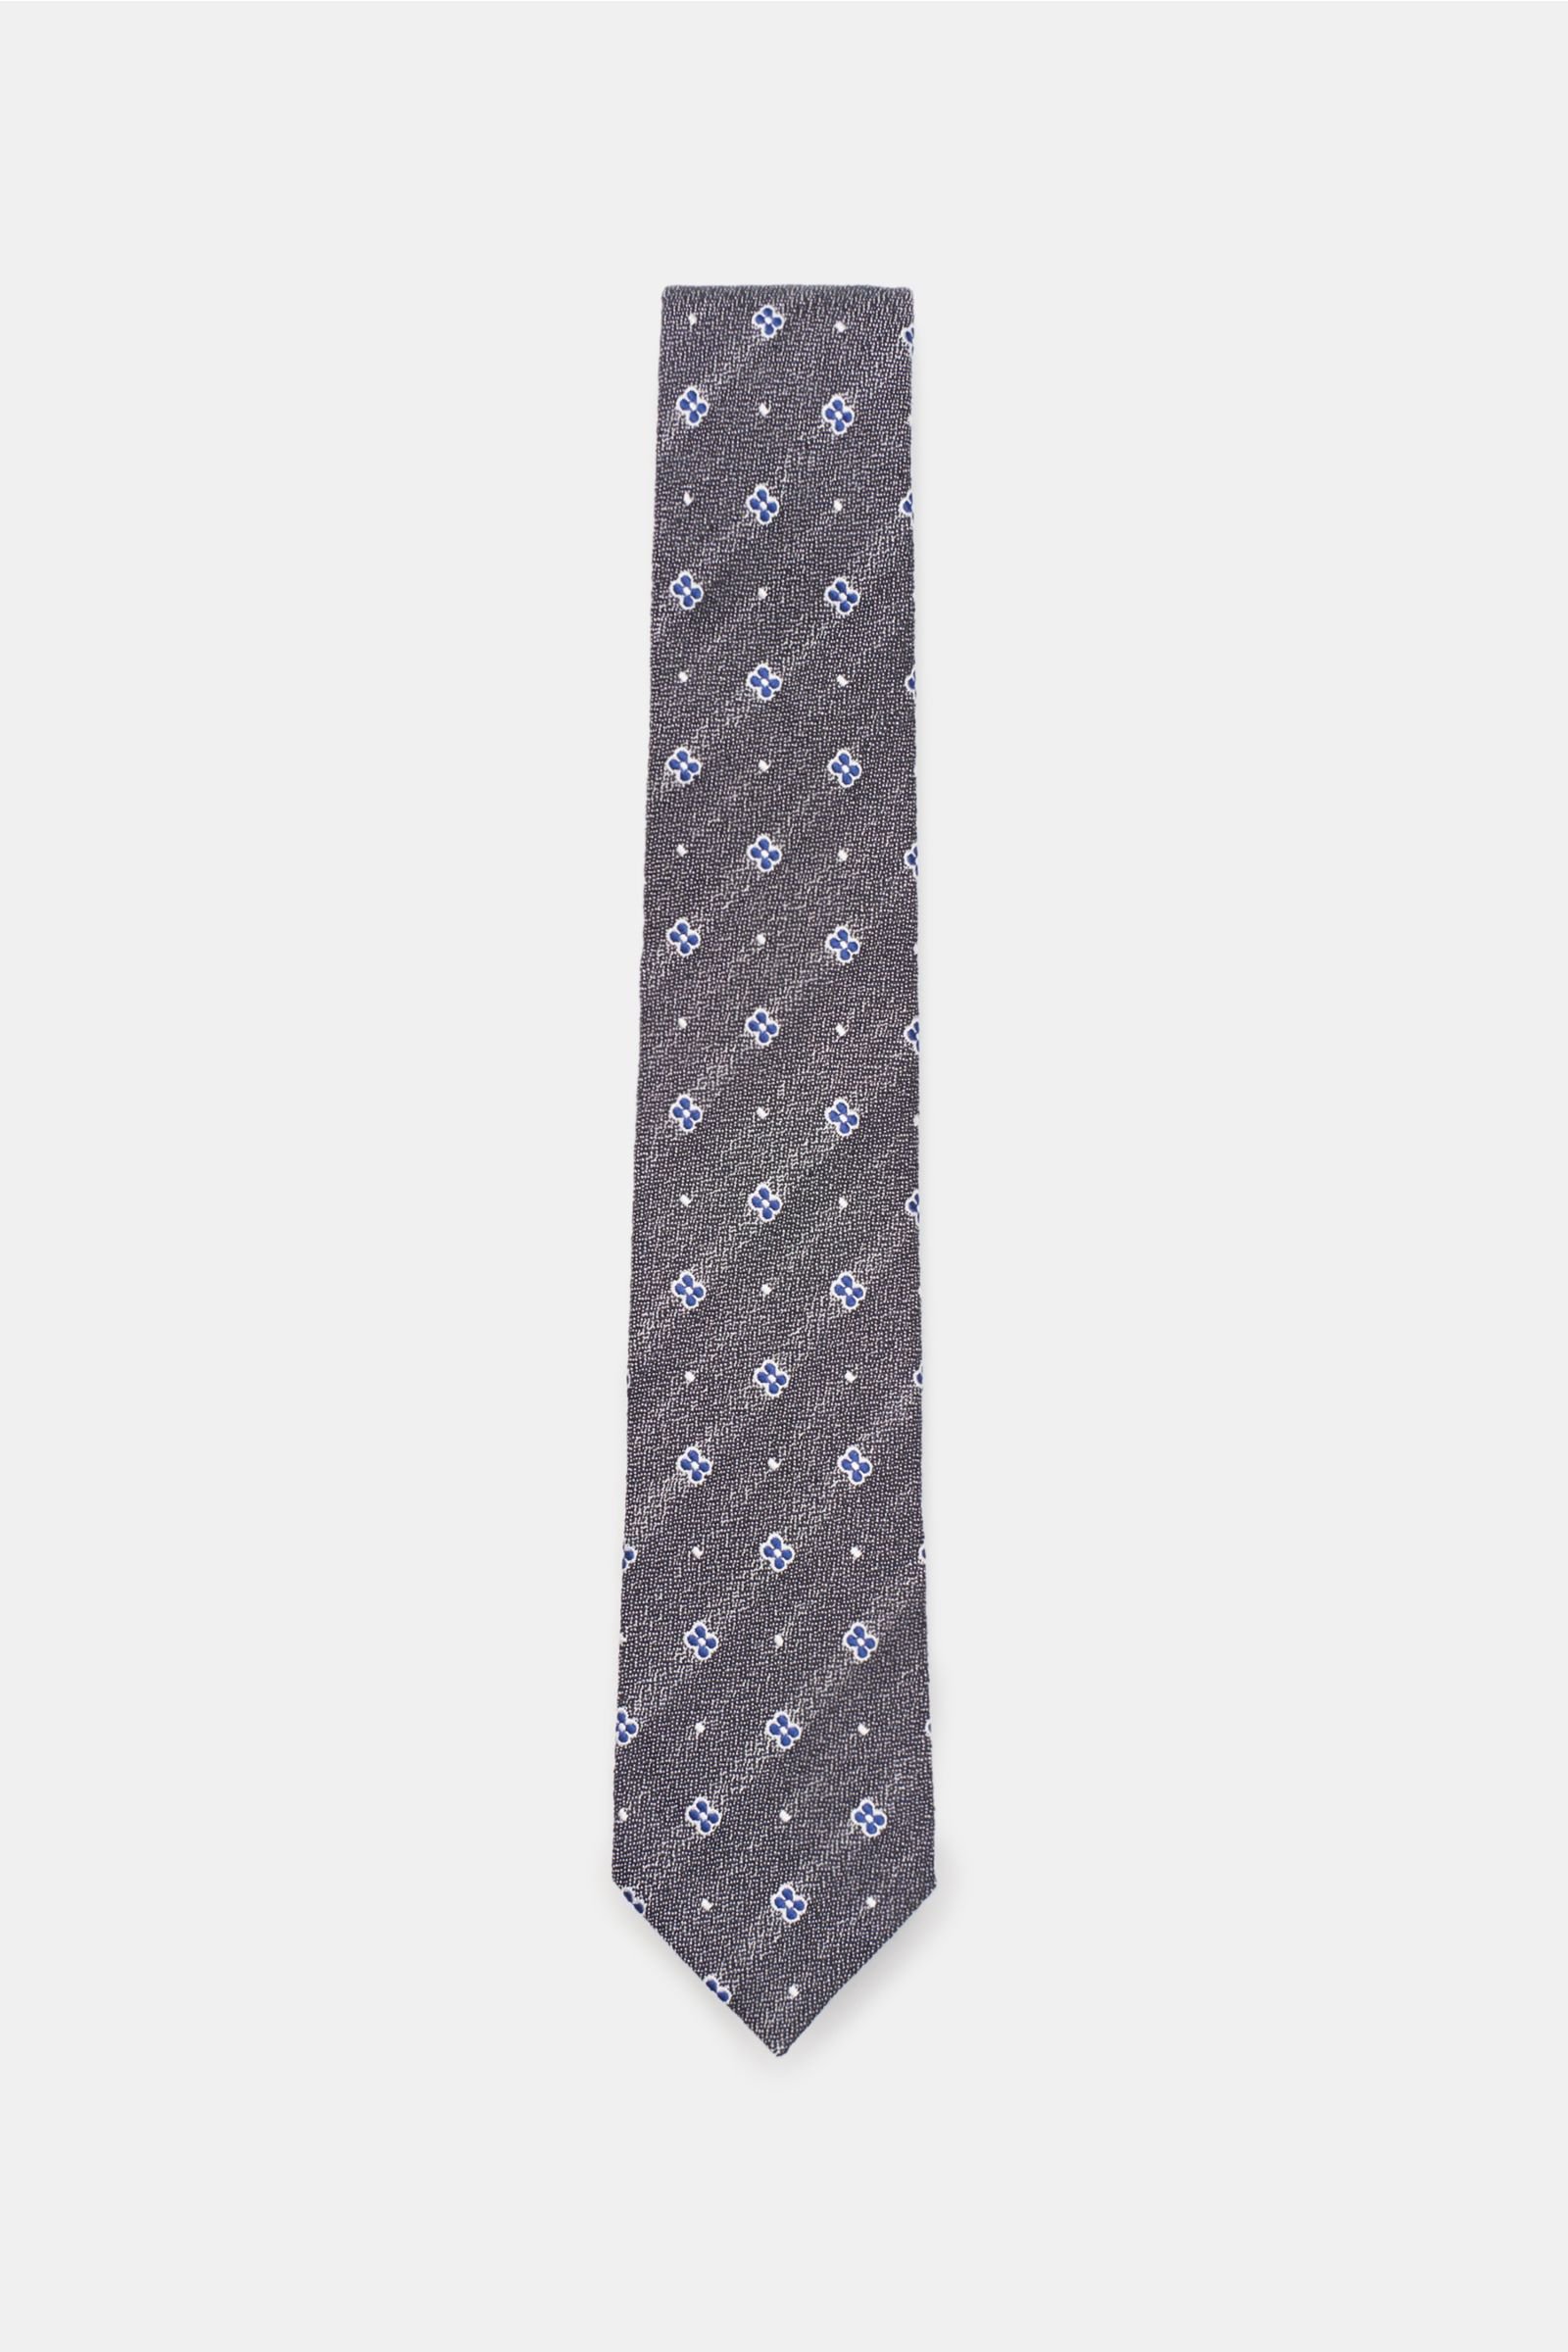 Tie dark grey/blue patterned